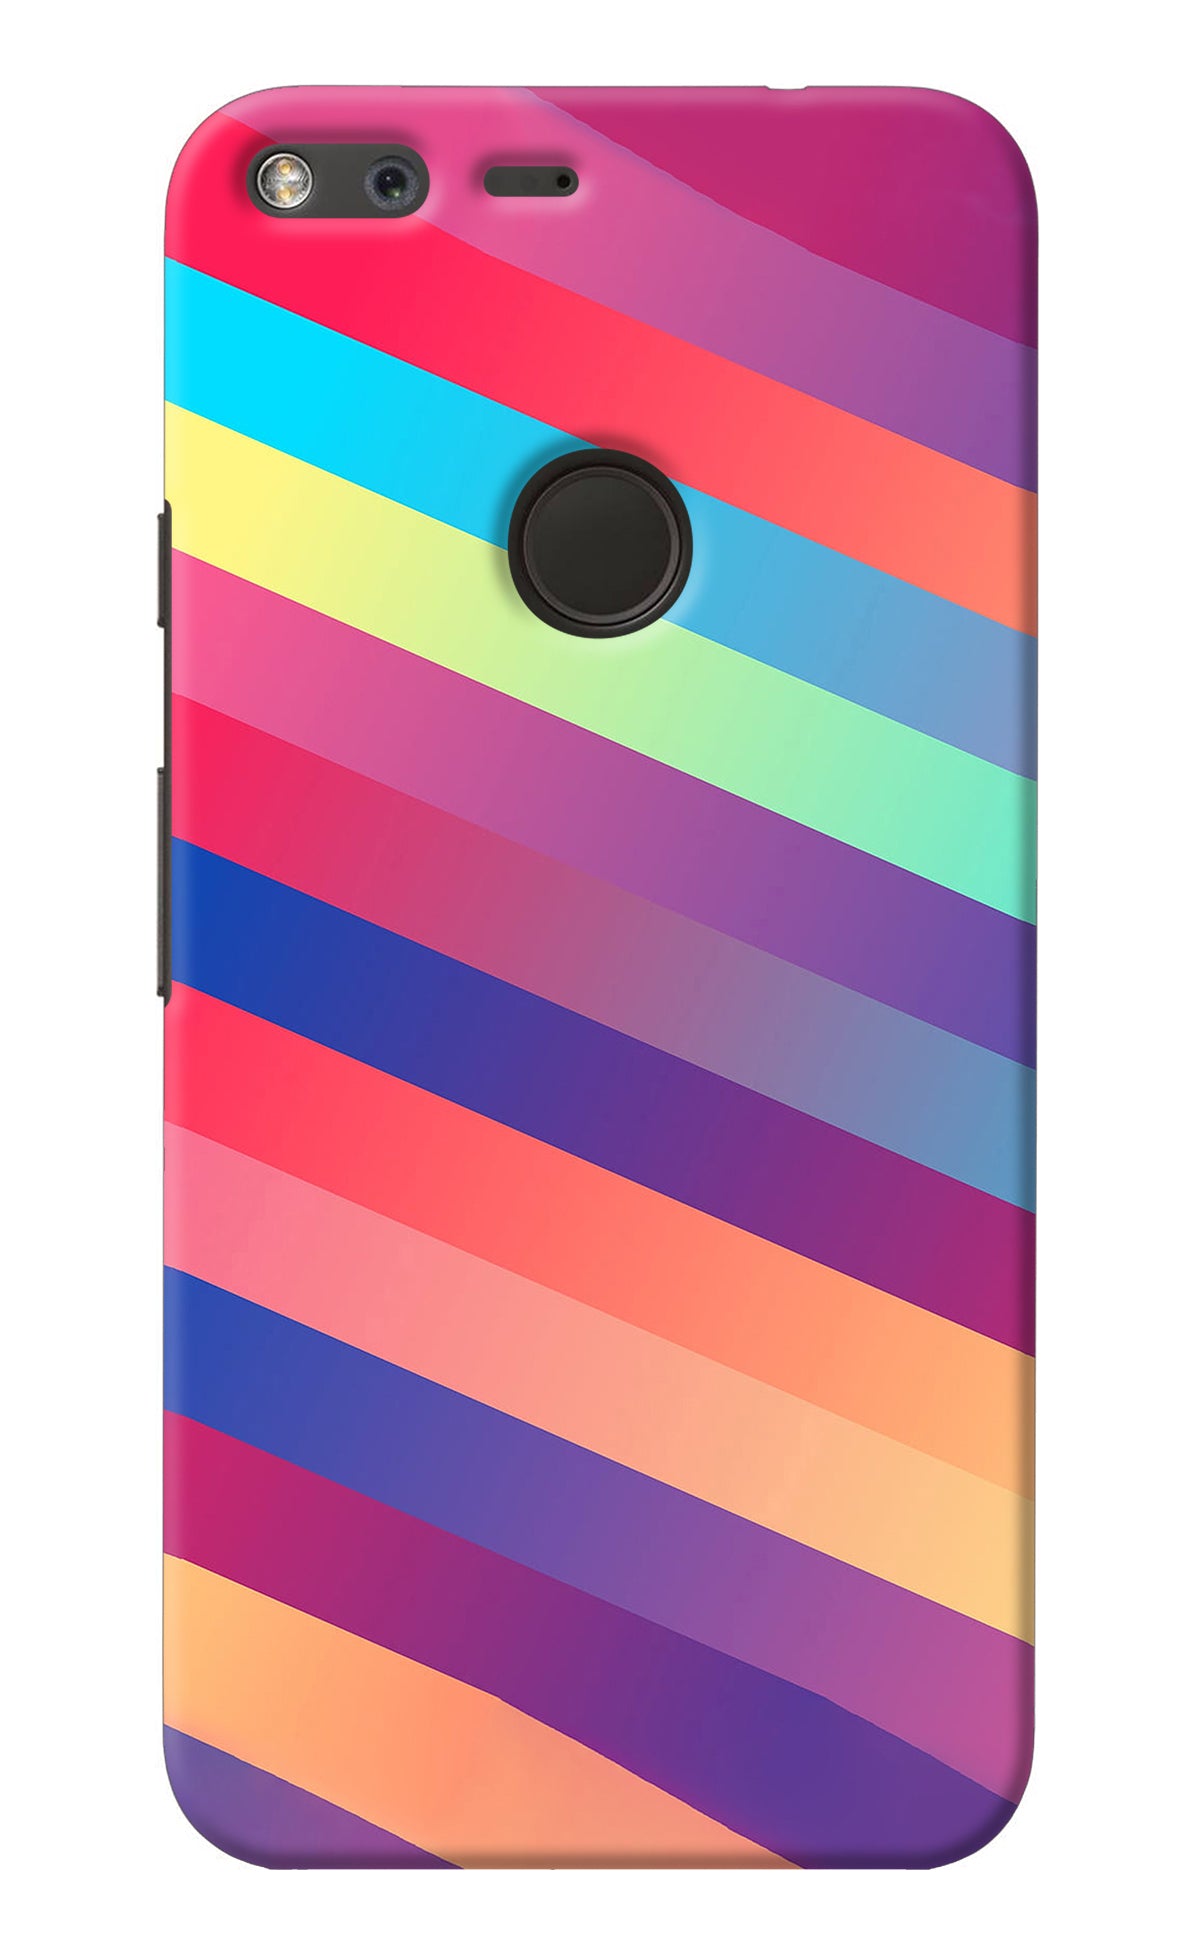 Stripes color Google Pixel XL Back Cover